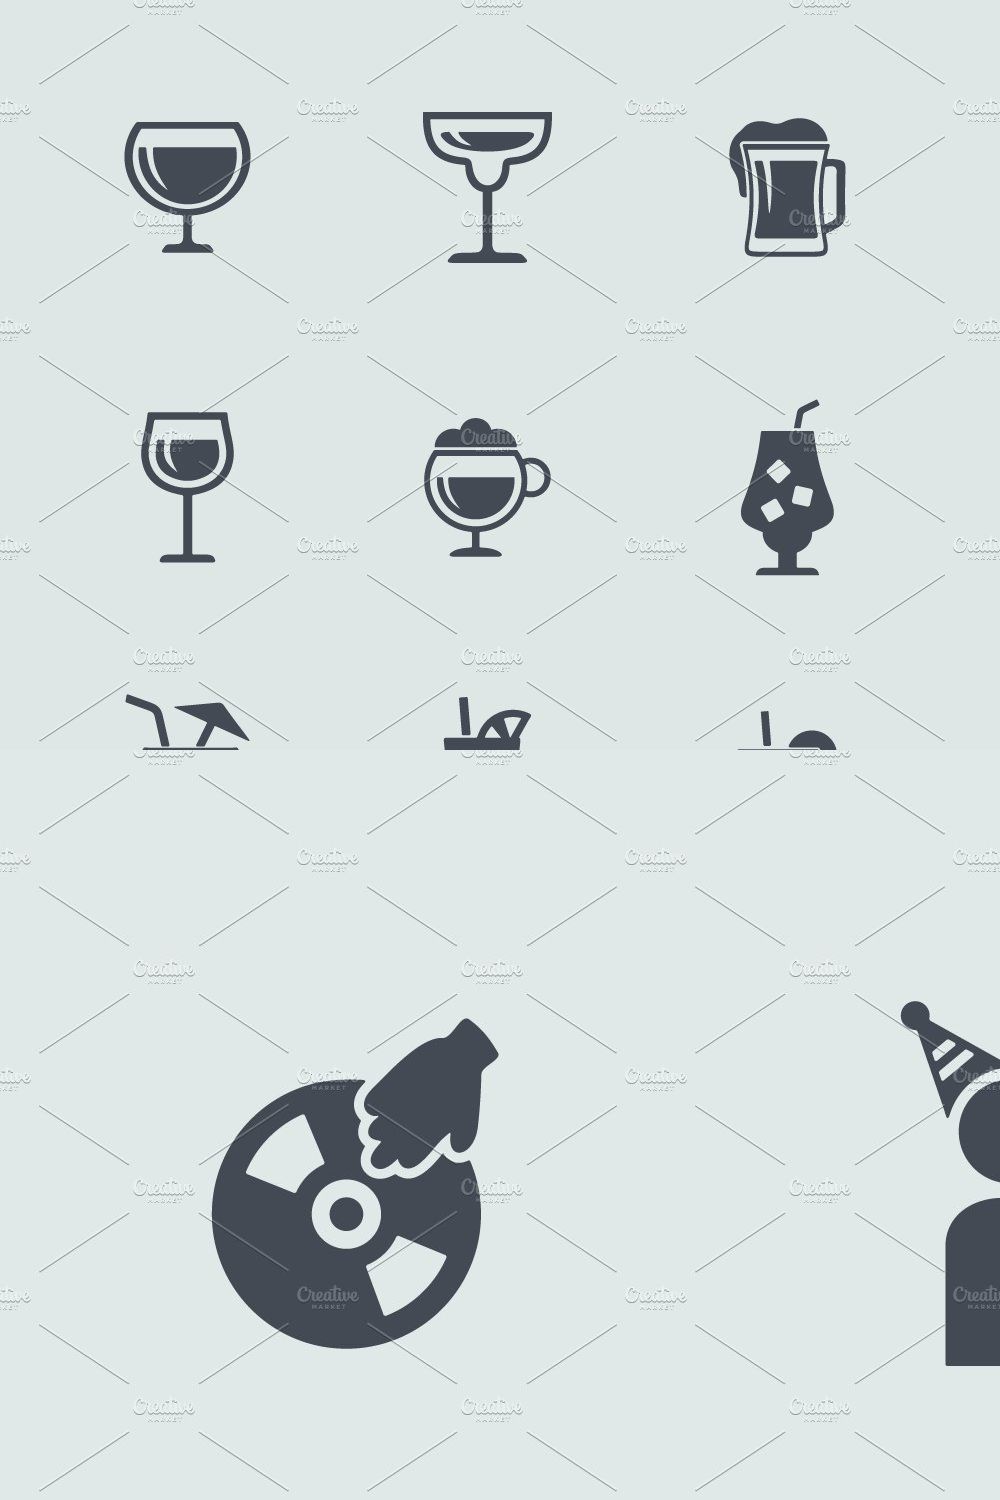 Drink icons + BONUS pinterest preview image.